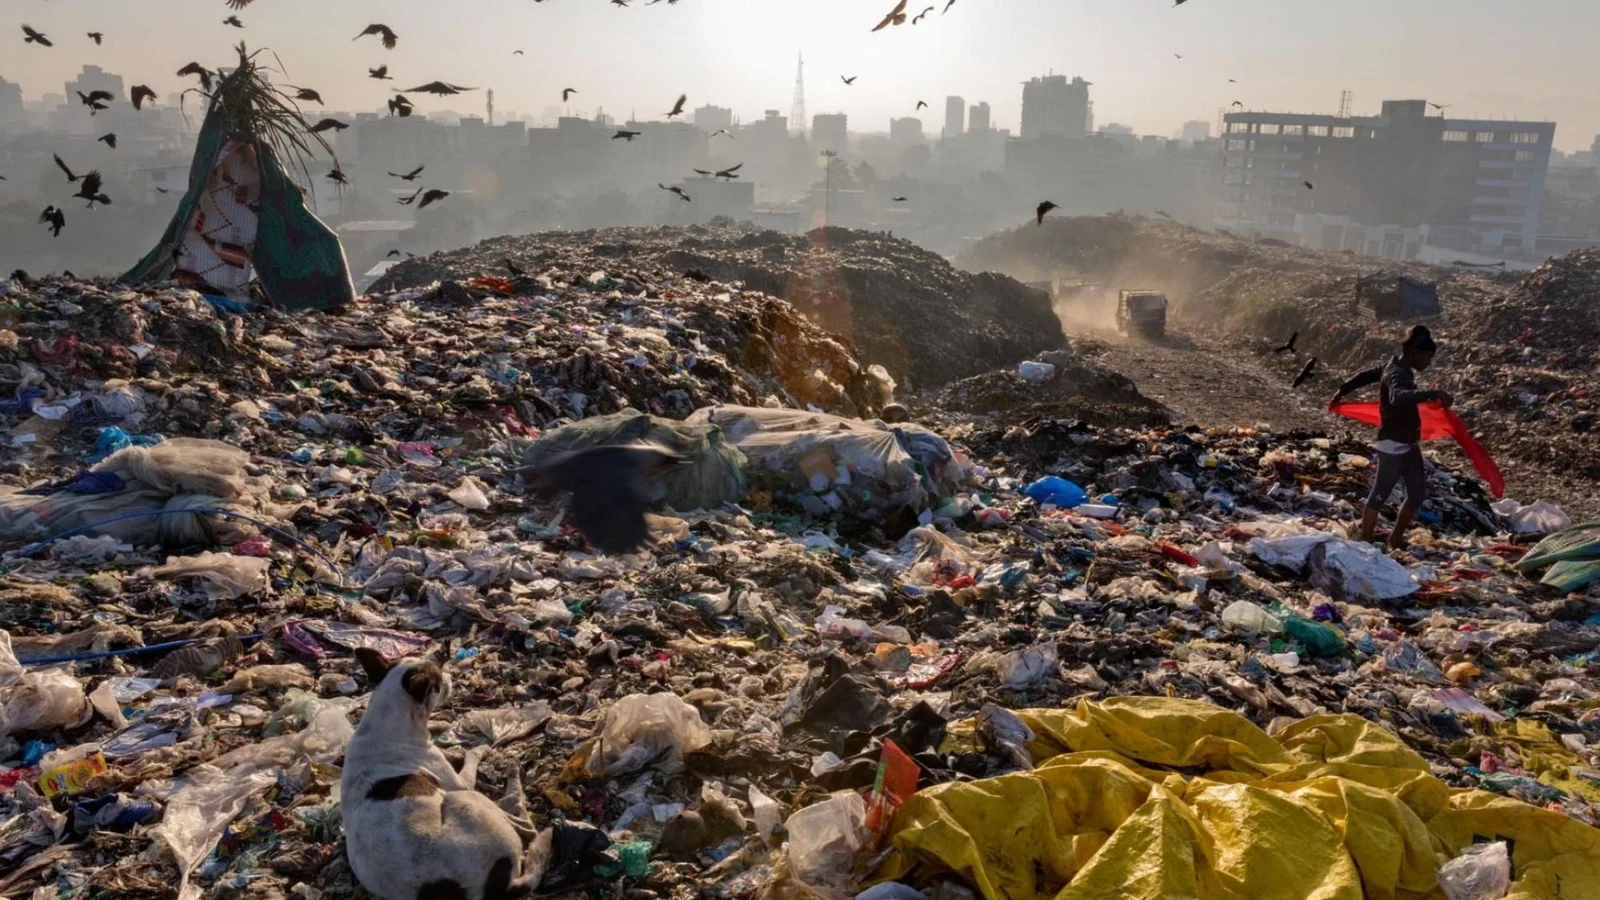 A landfill full of land pollution